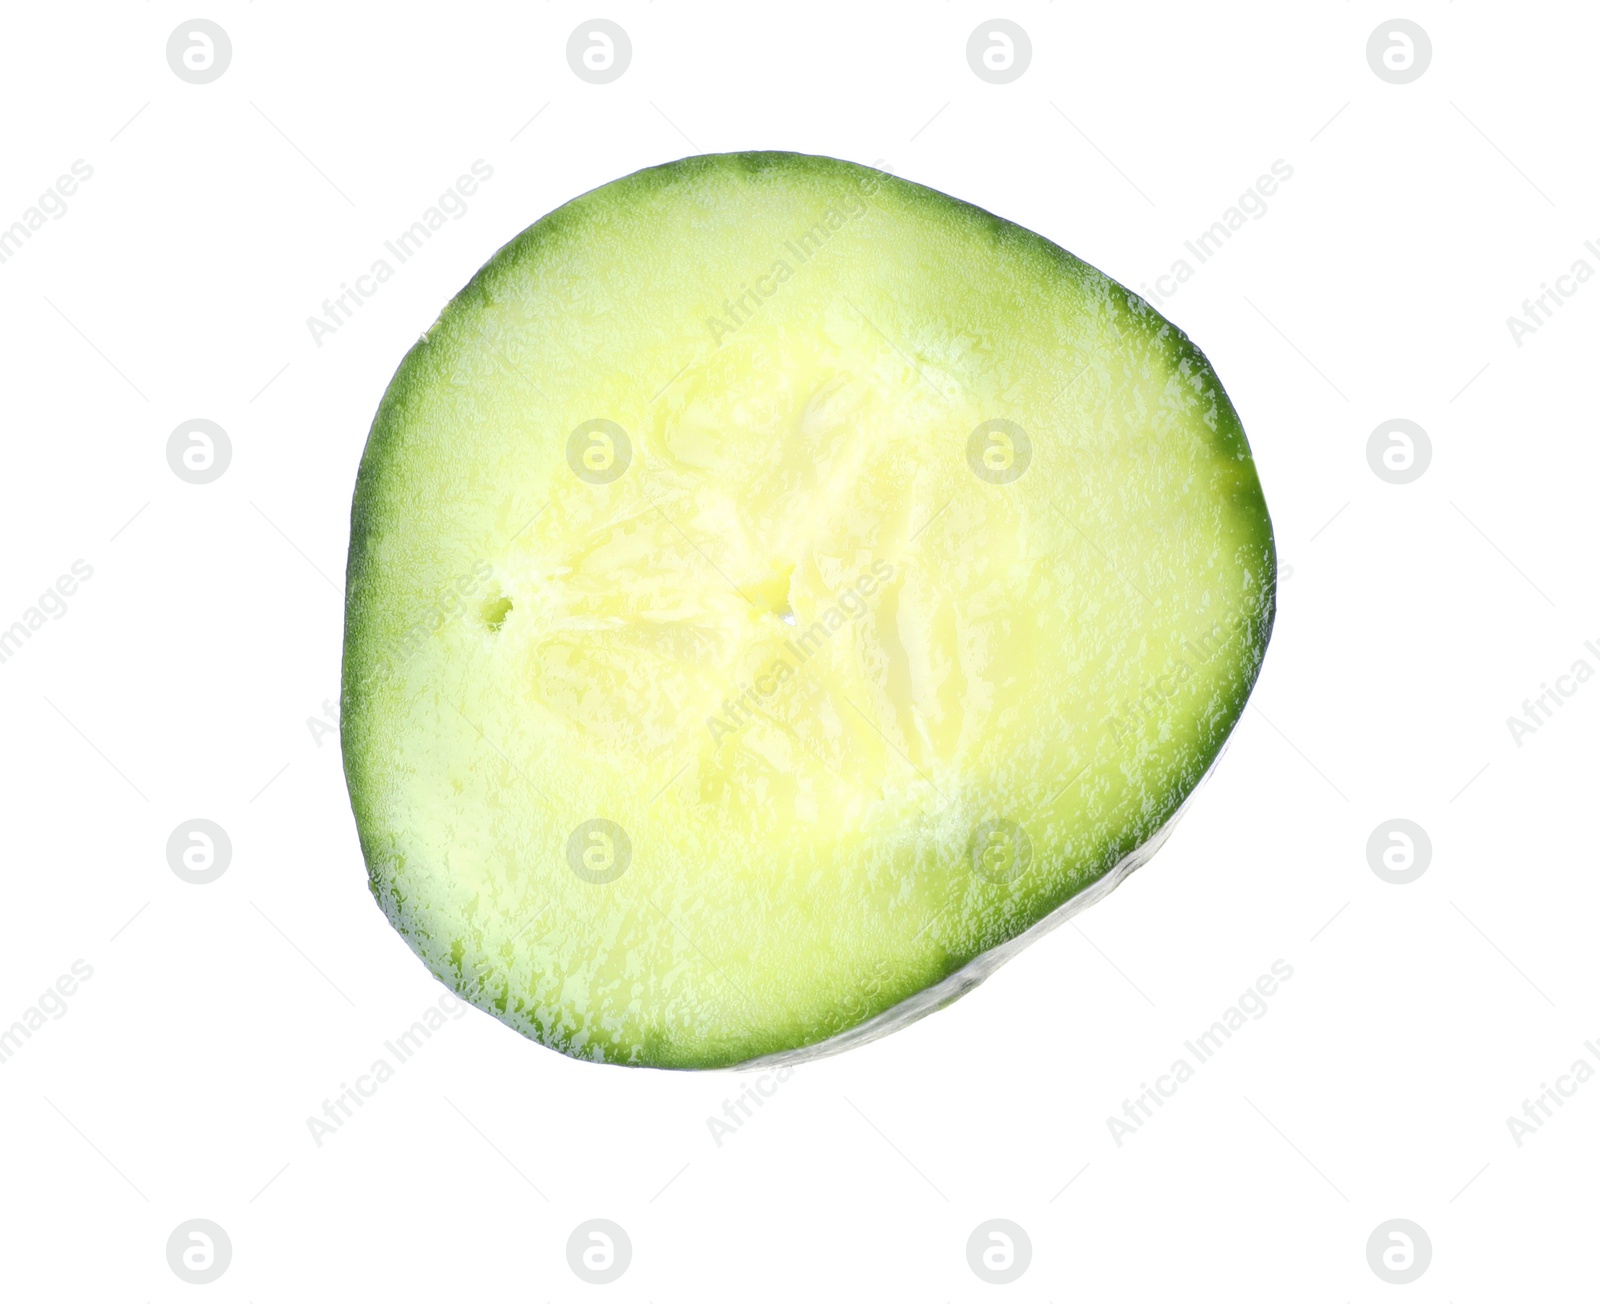 Photo of Cut fresh green cucumber on white background